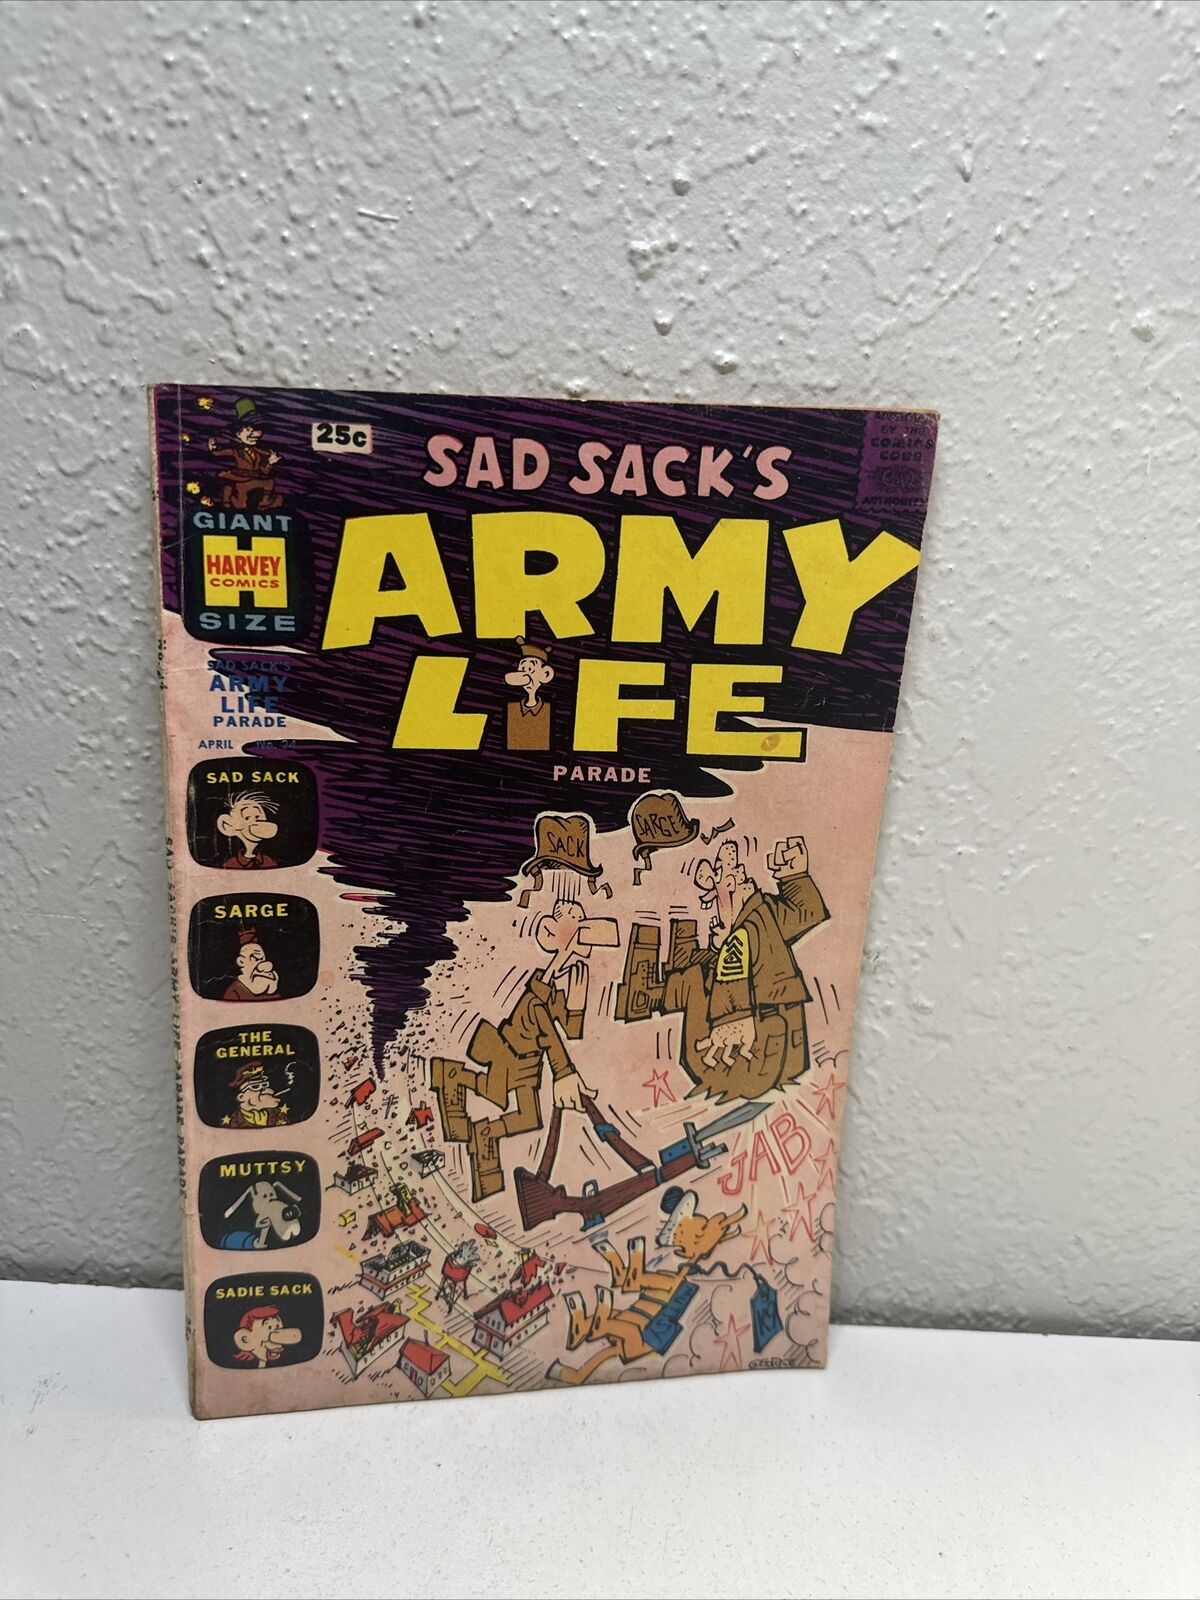 Sad Sack's Army Life Parade #24 (1969)